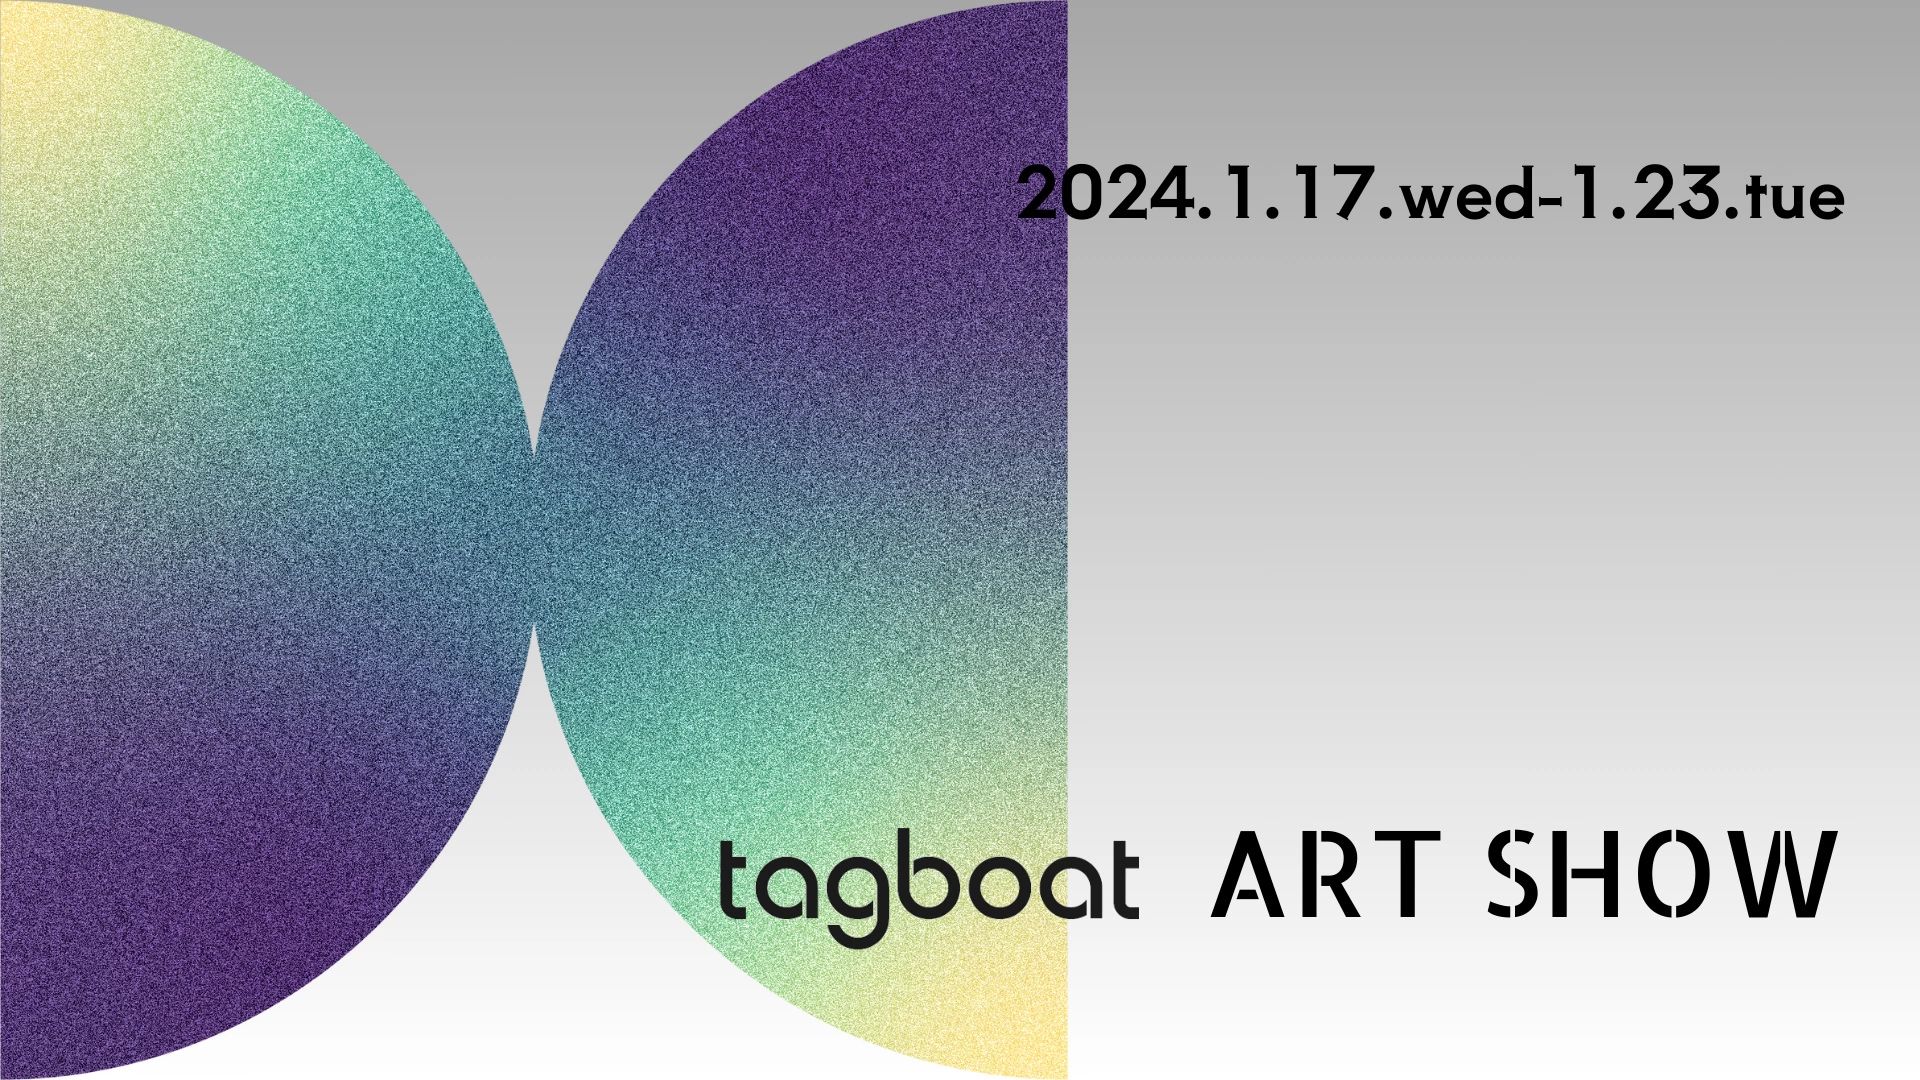 tagboat ART SHOW